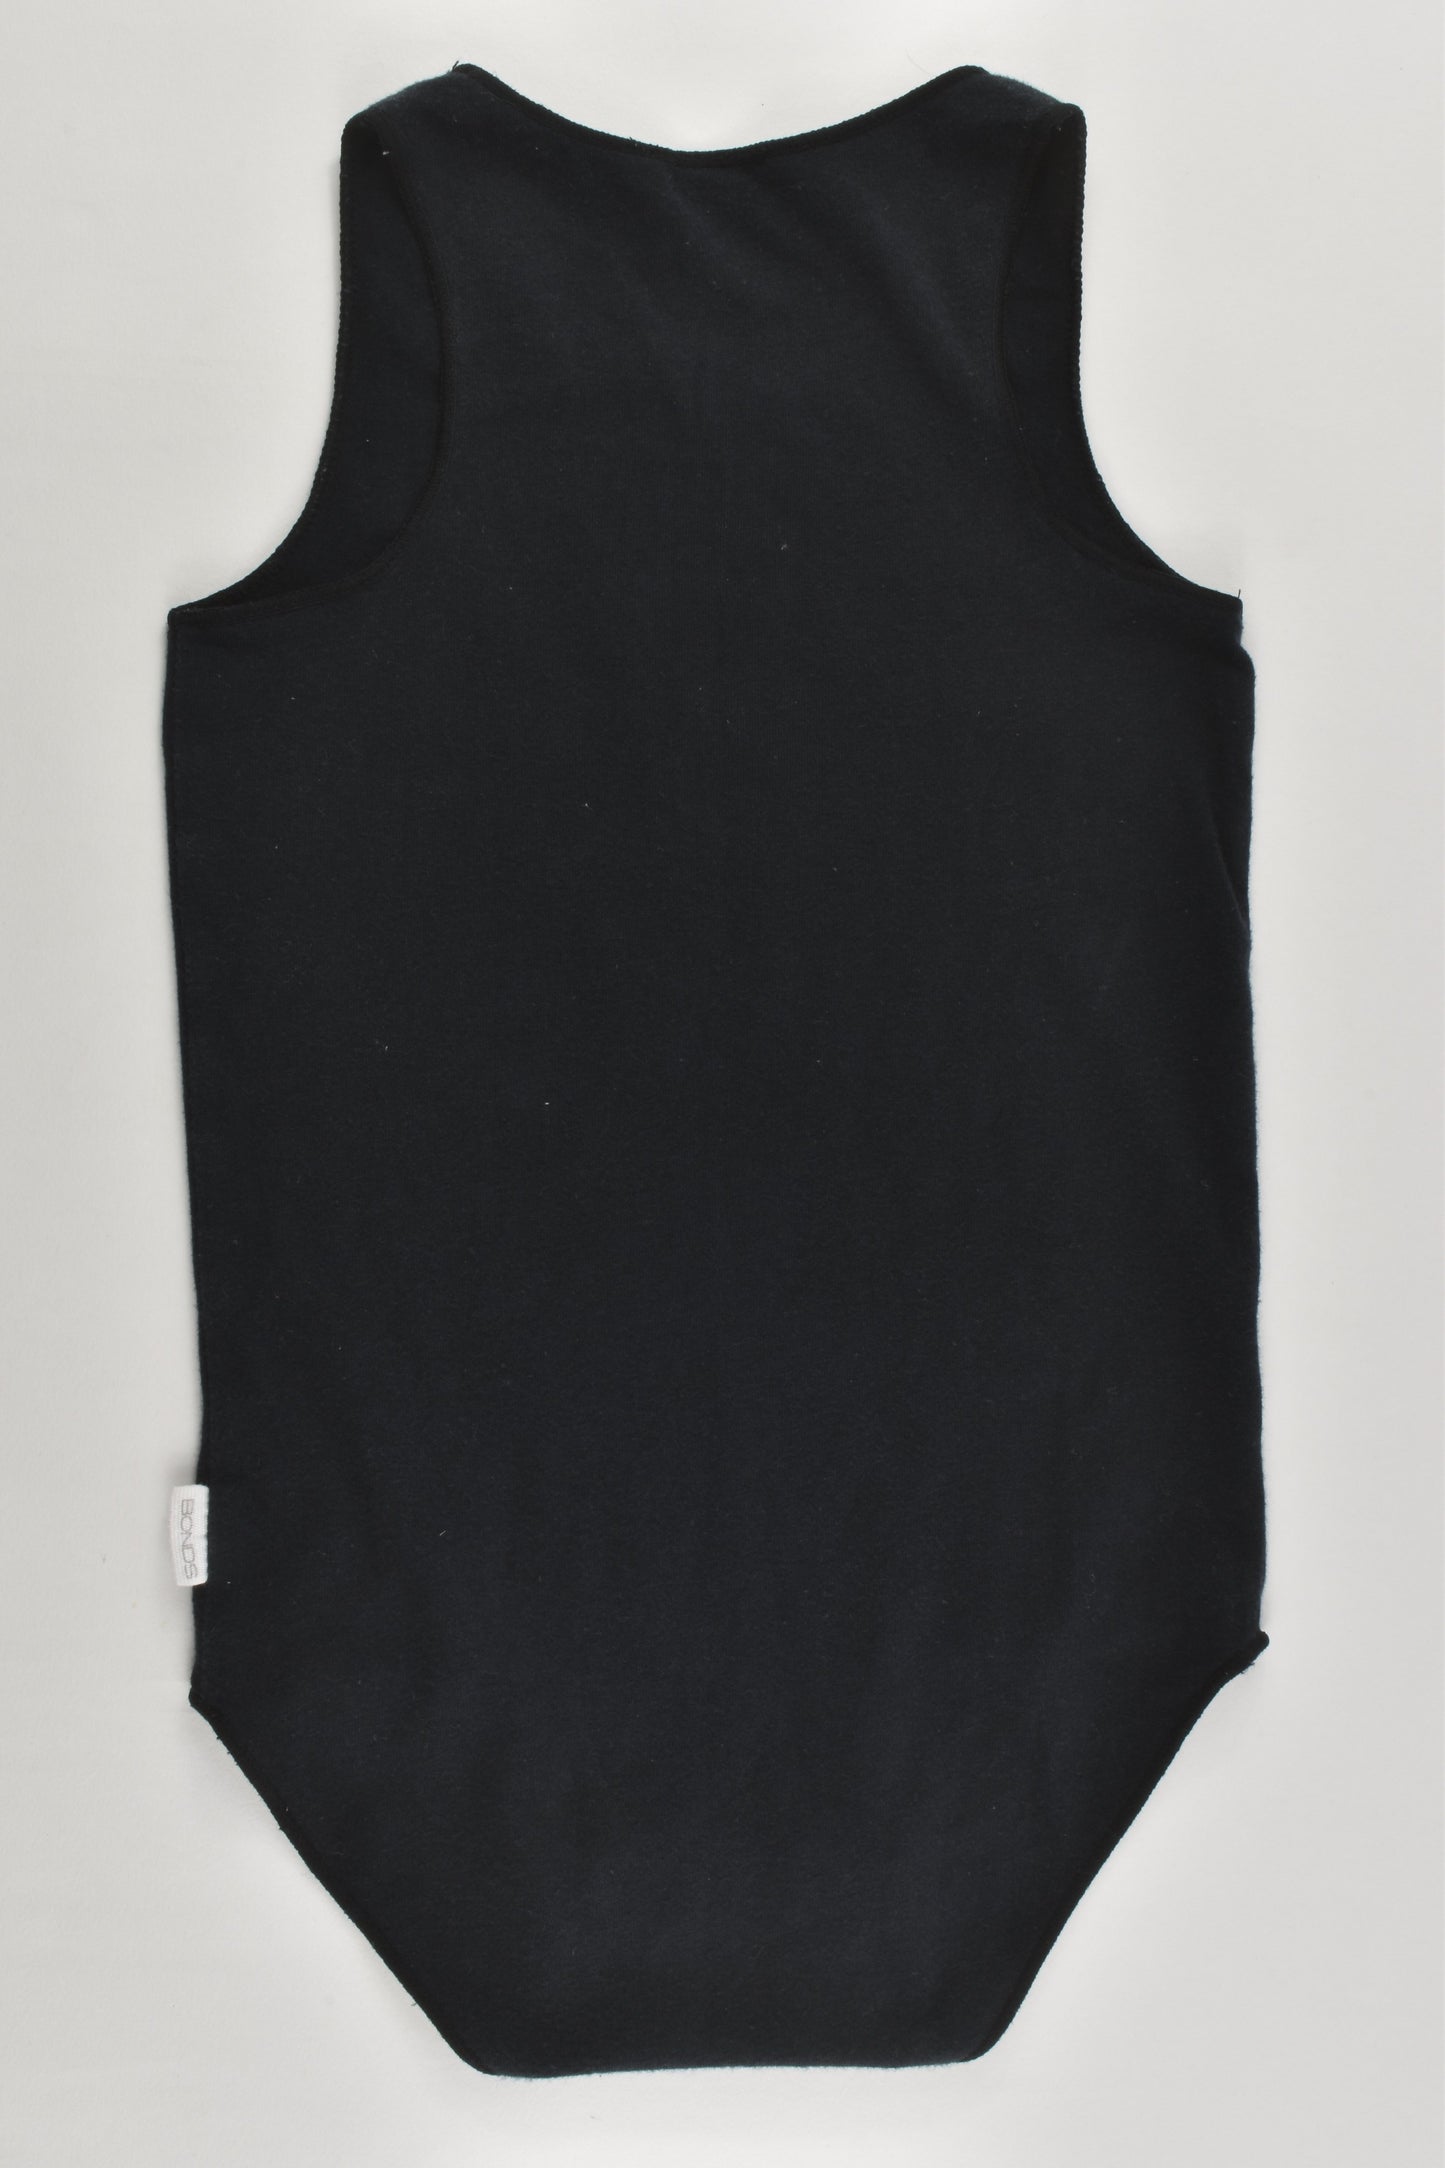 Bonds Size 1 (12-18 months) Black Sleeveless Bodysuit